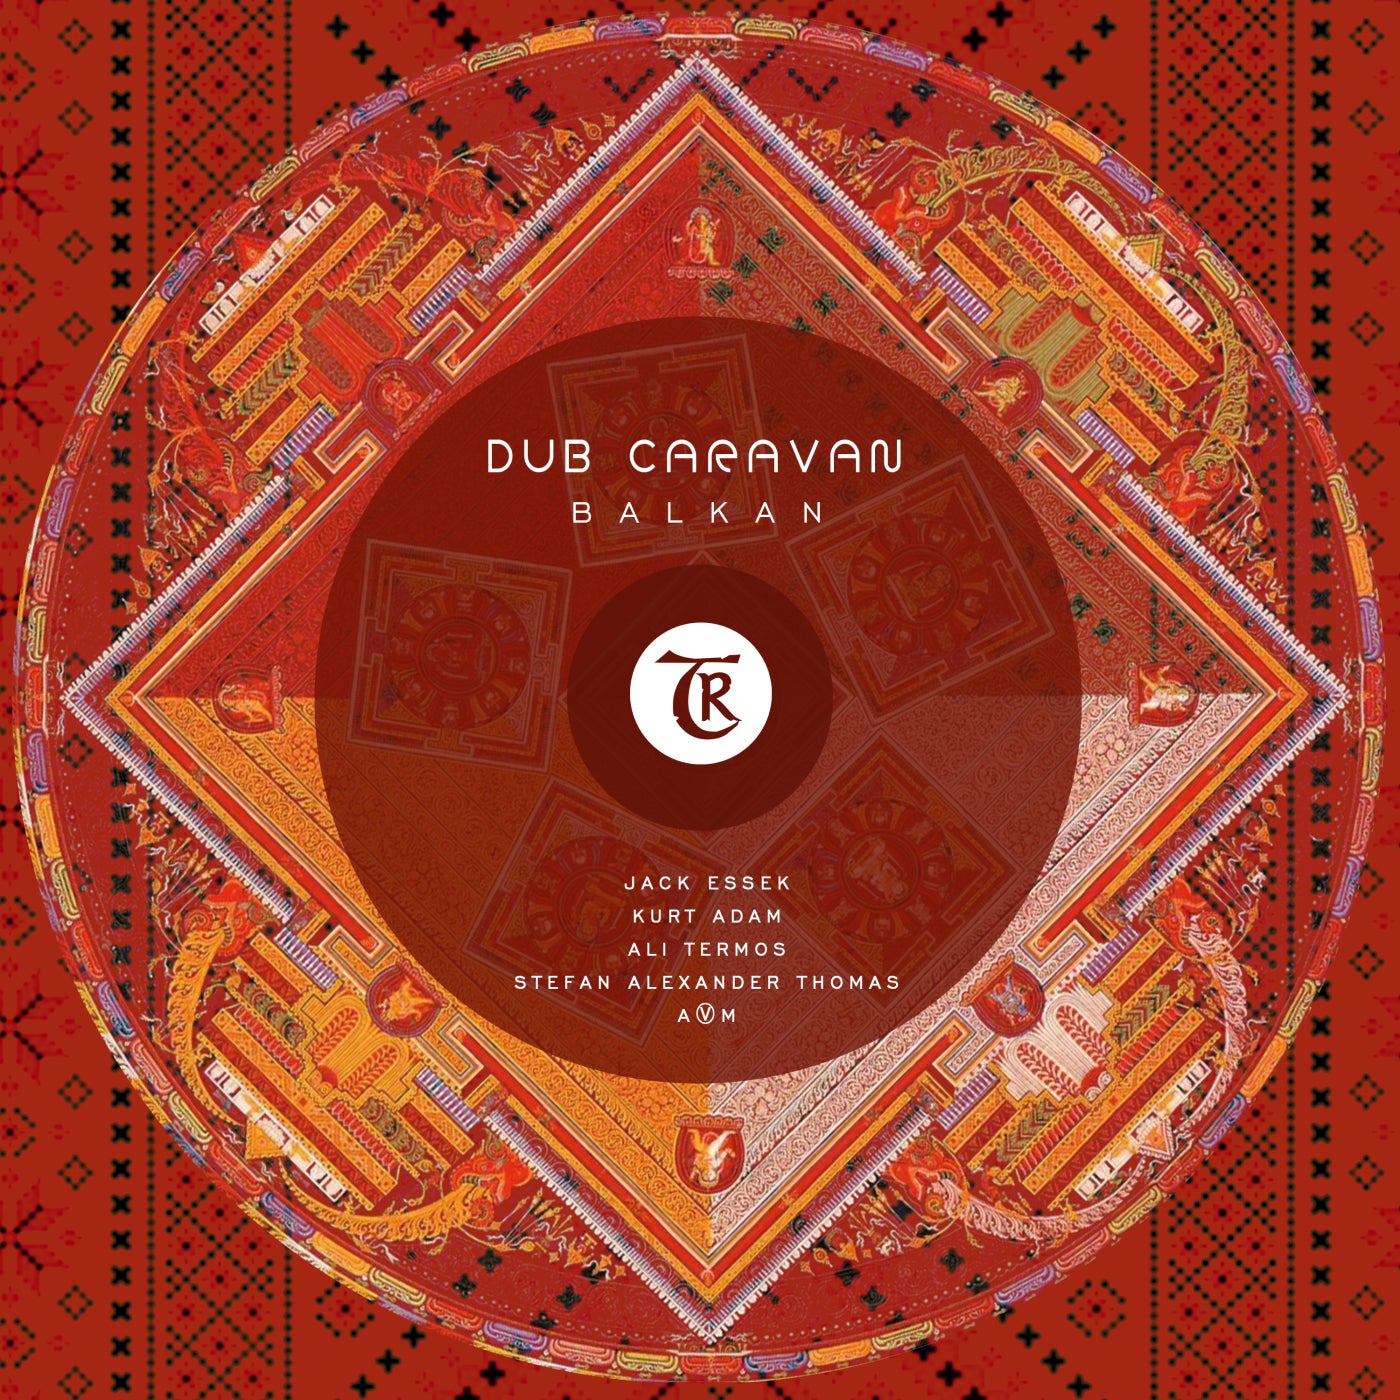 Dub Caravan - Balkan [TR089]